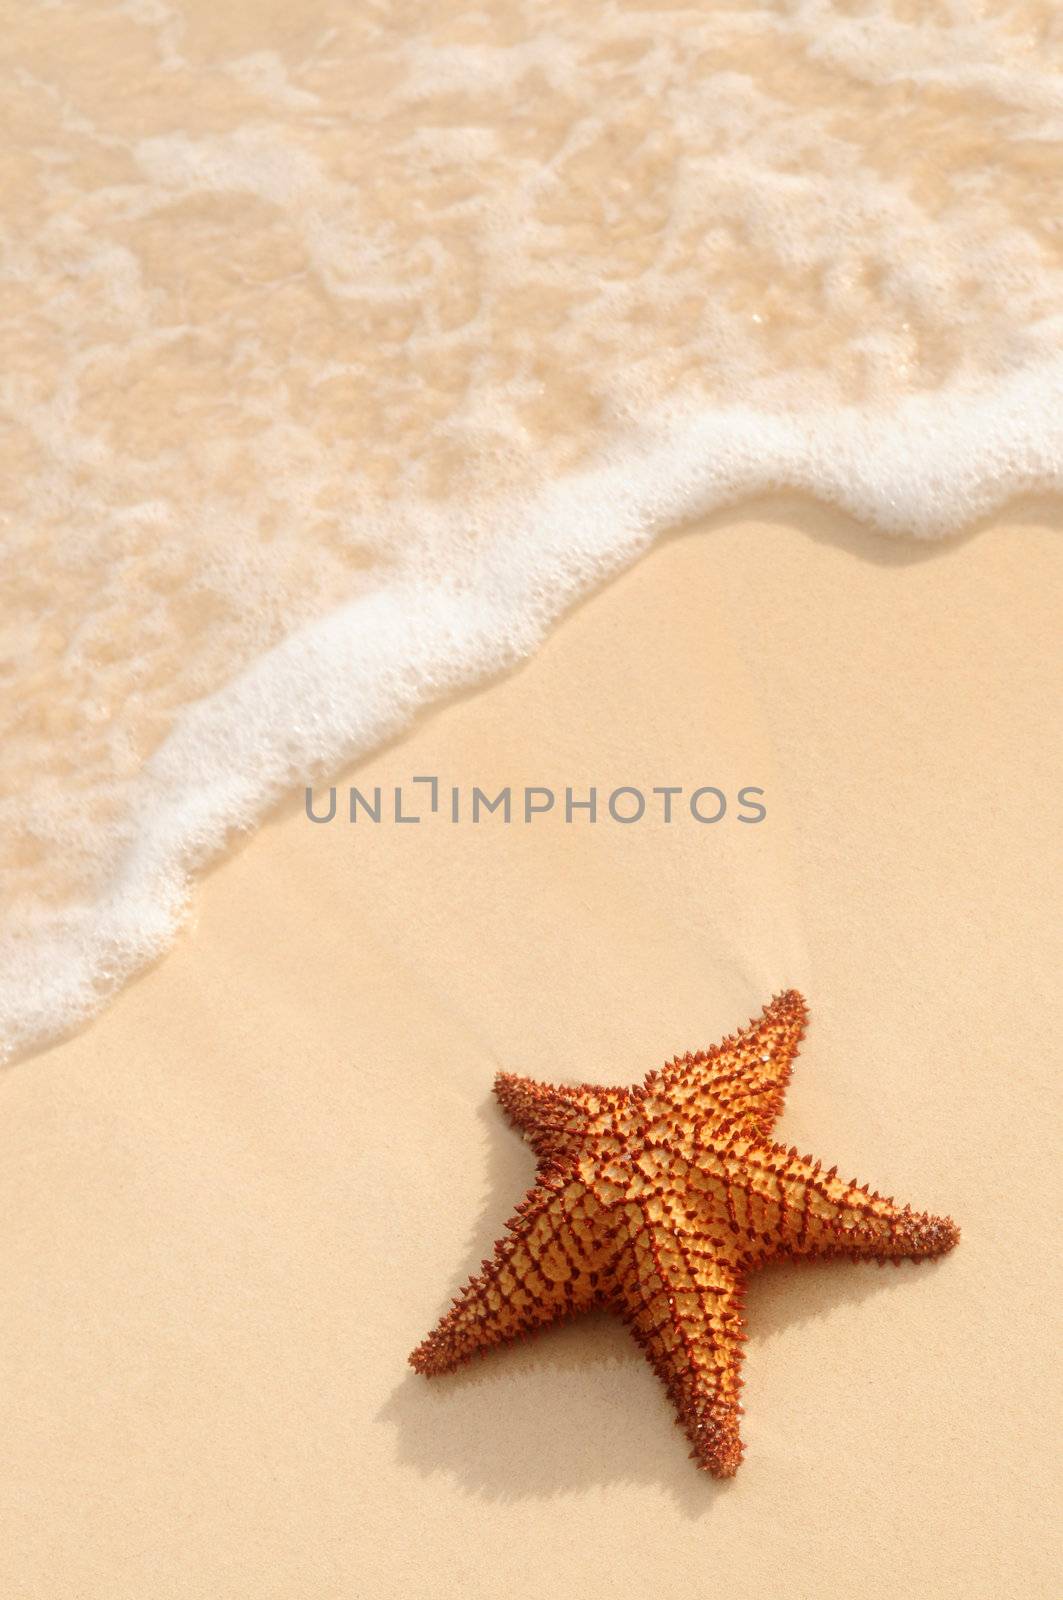 Starfish and ocean wave on sandy tropical beach